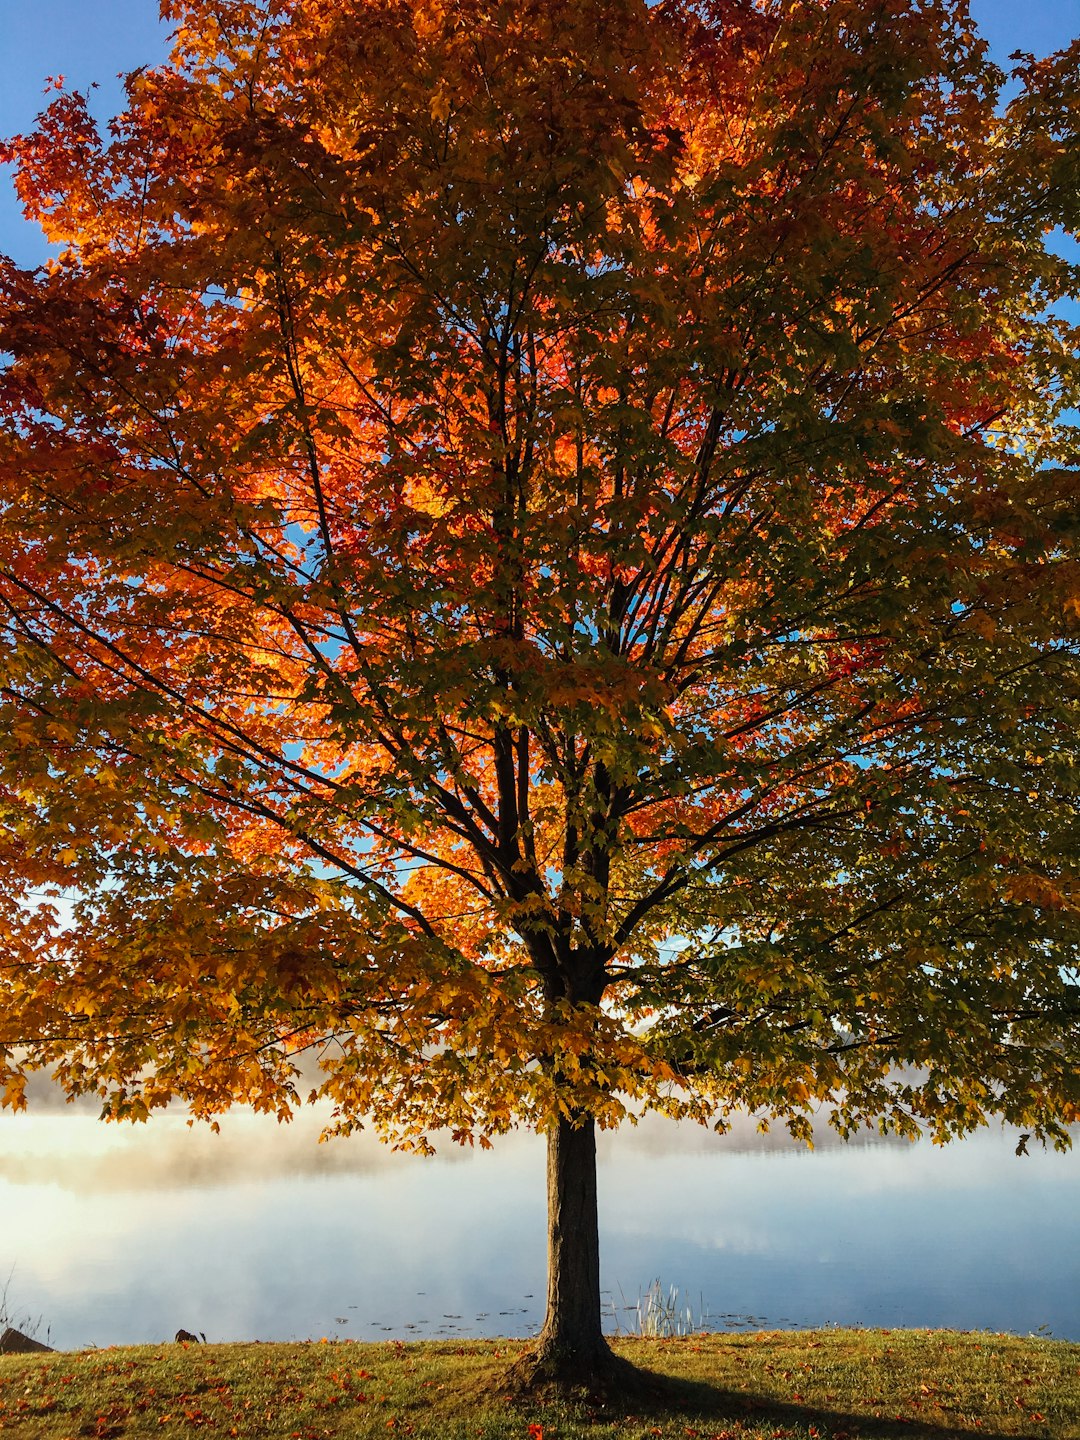 Fall maple tree photo by Aaron Burden (@aaronburden) on Unsplash